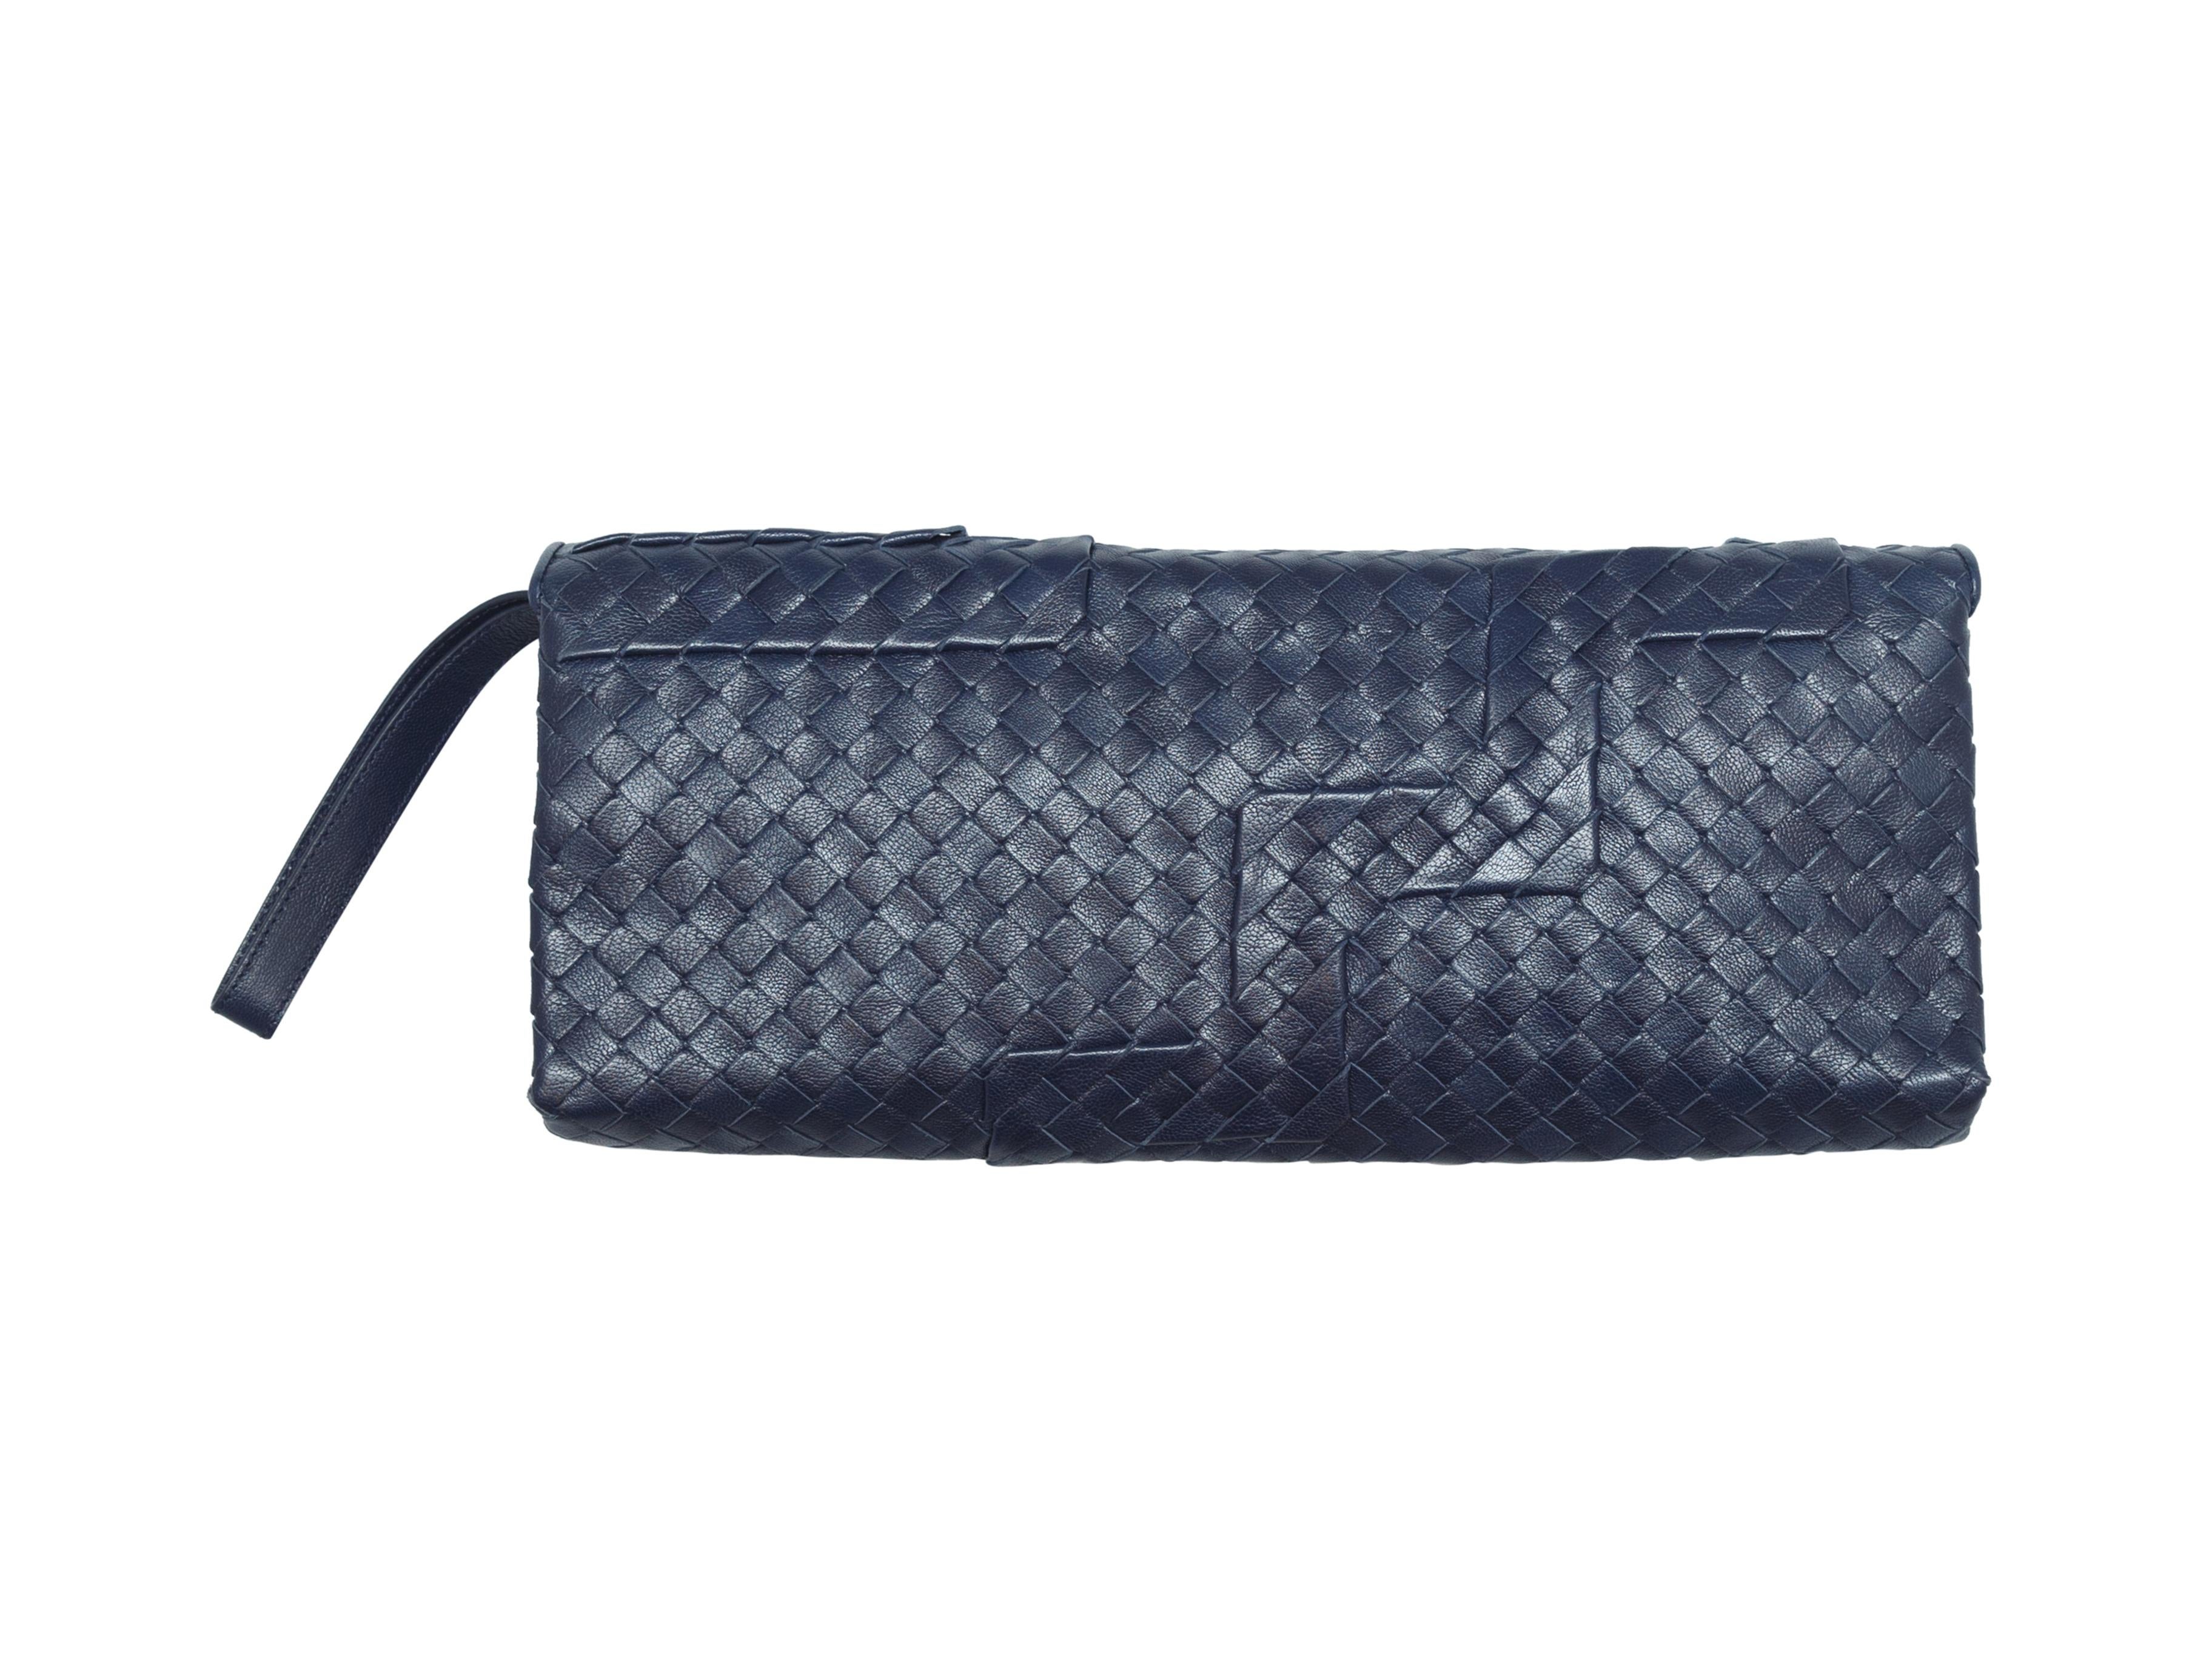 Product details: Navy Intrecciato leather rectangular clutch by Bottega Veneta. Wrist strap at side. 13